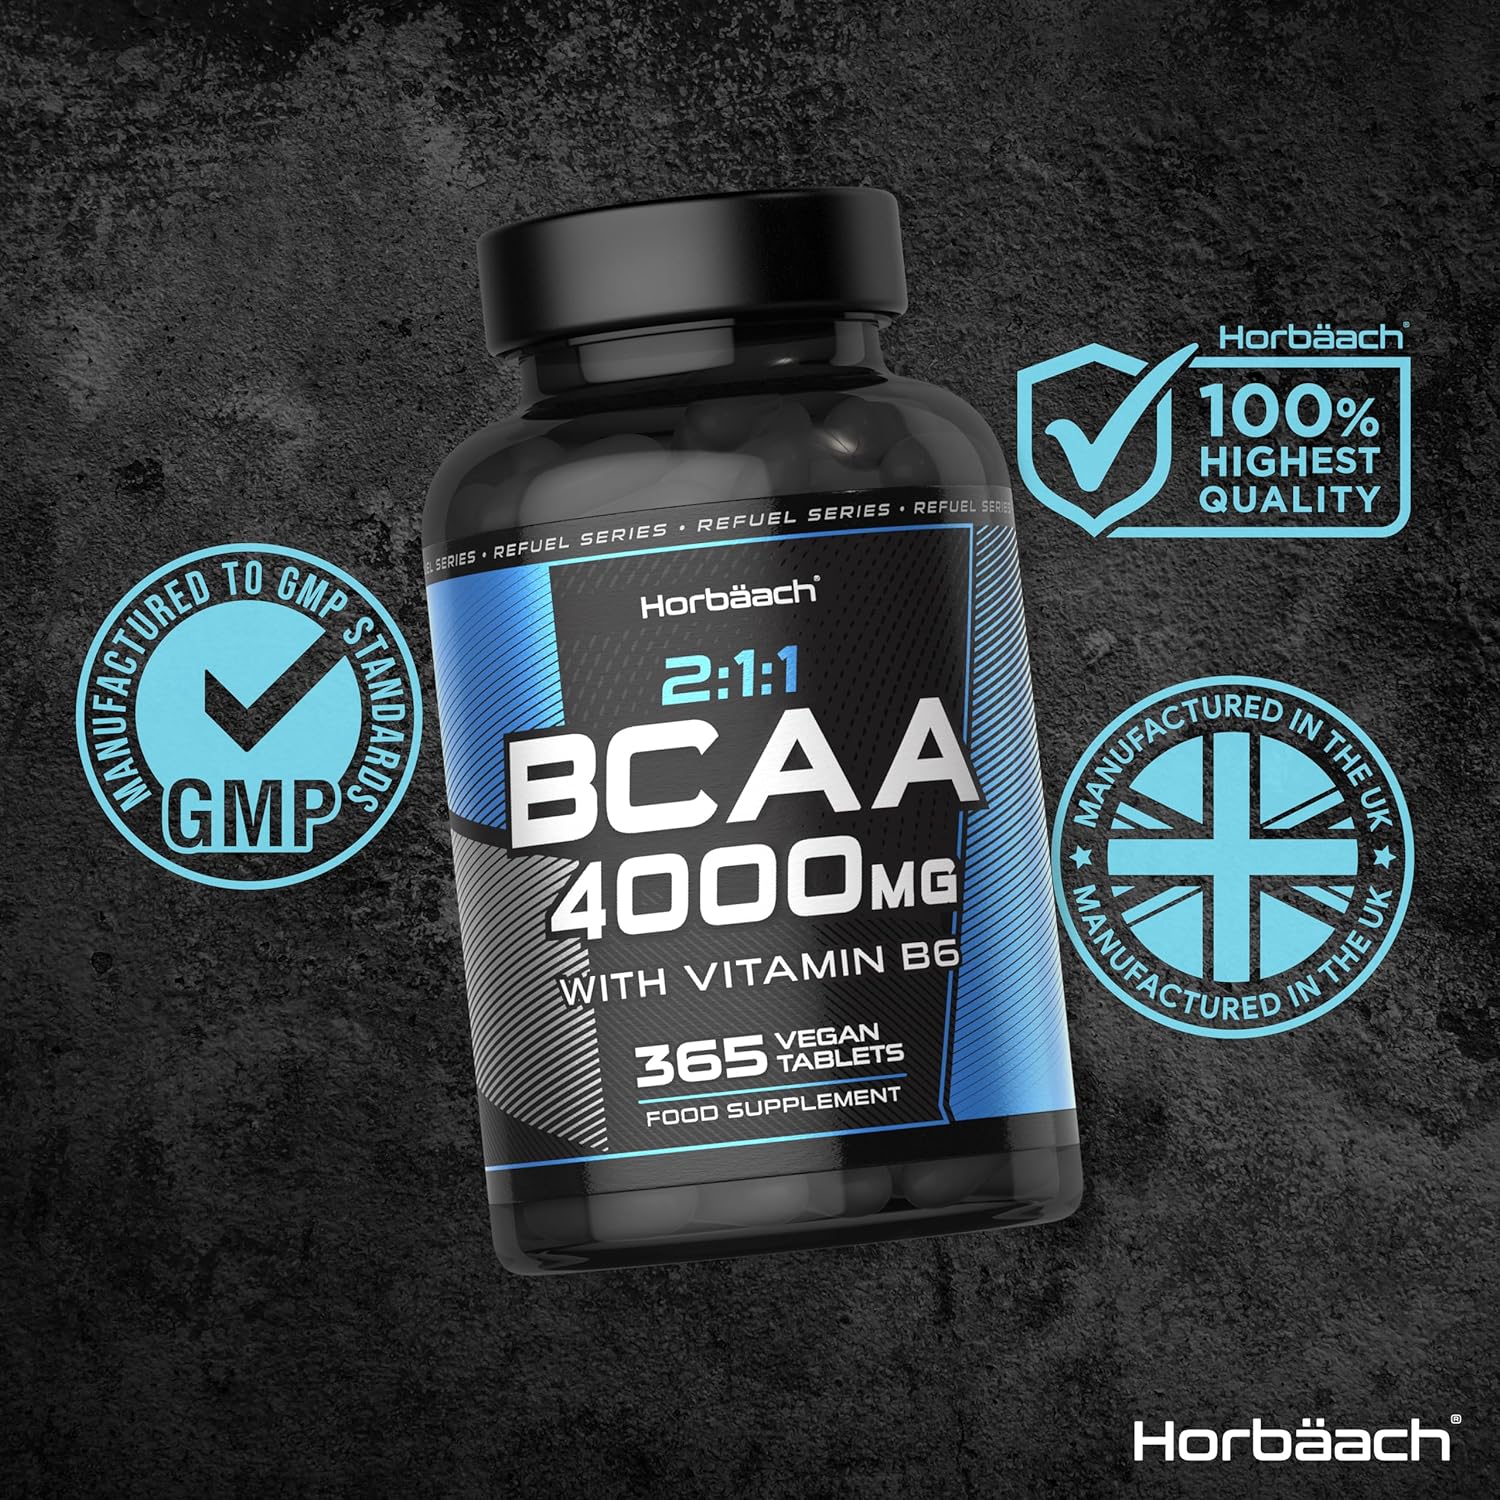 BCAA 4000 mg with Vitamin B6 | 365 Tablets